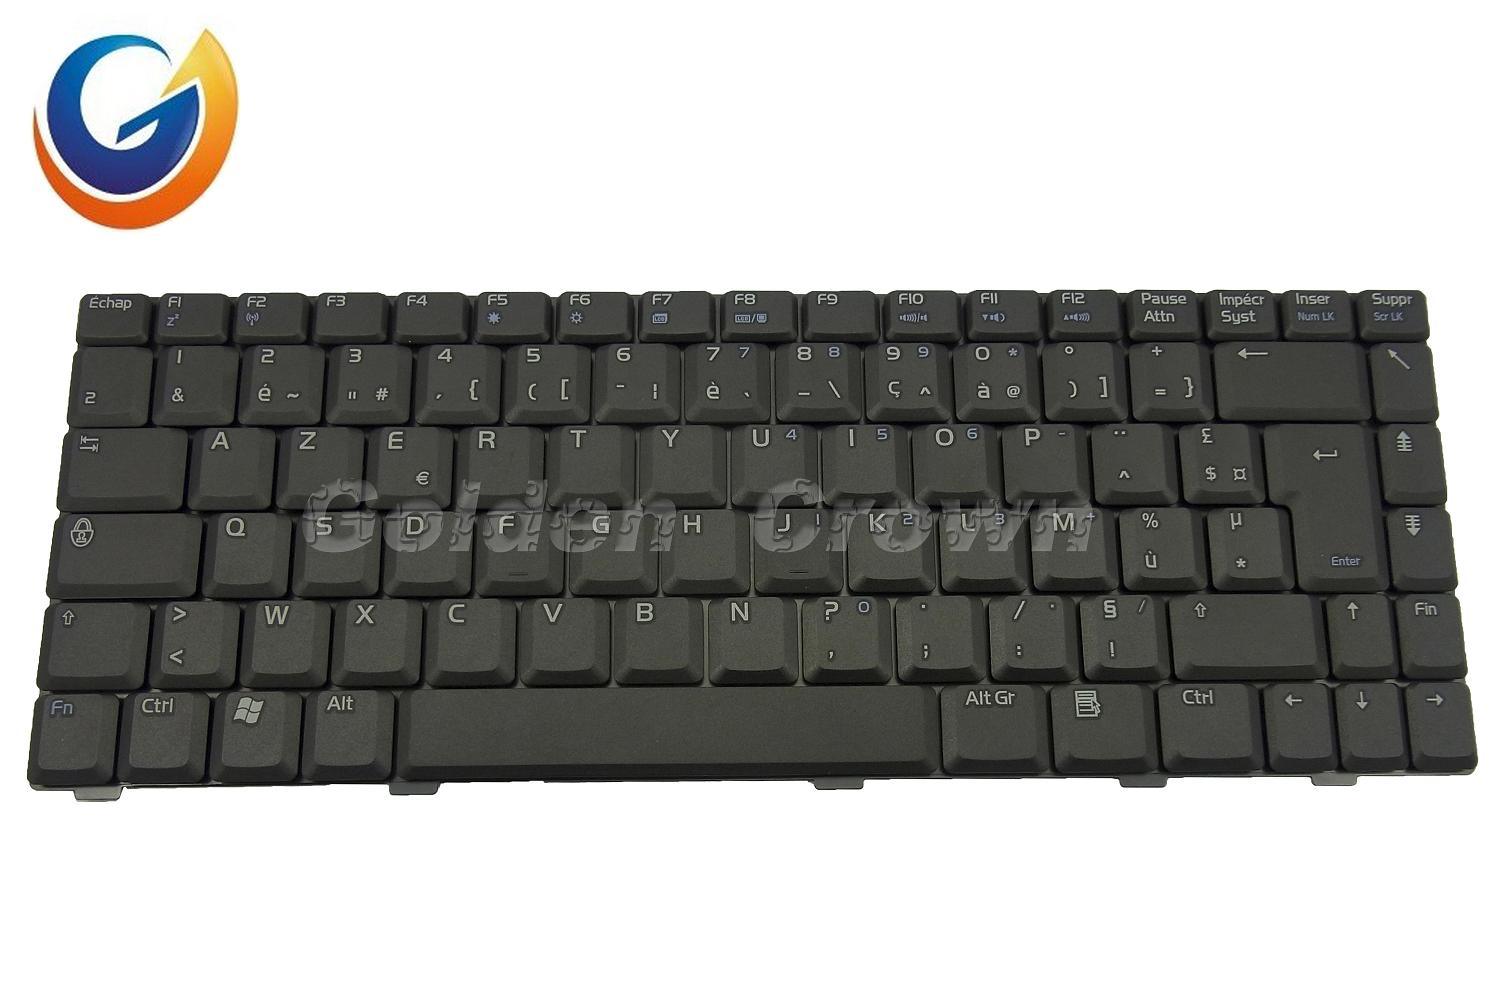 Laptop Keyboard Teclado for Asus A8 Black Layout US DM FR SP